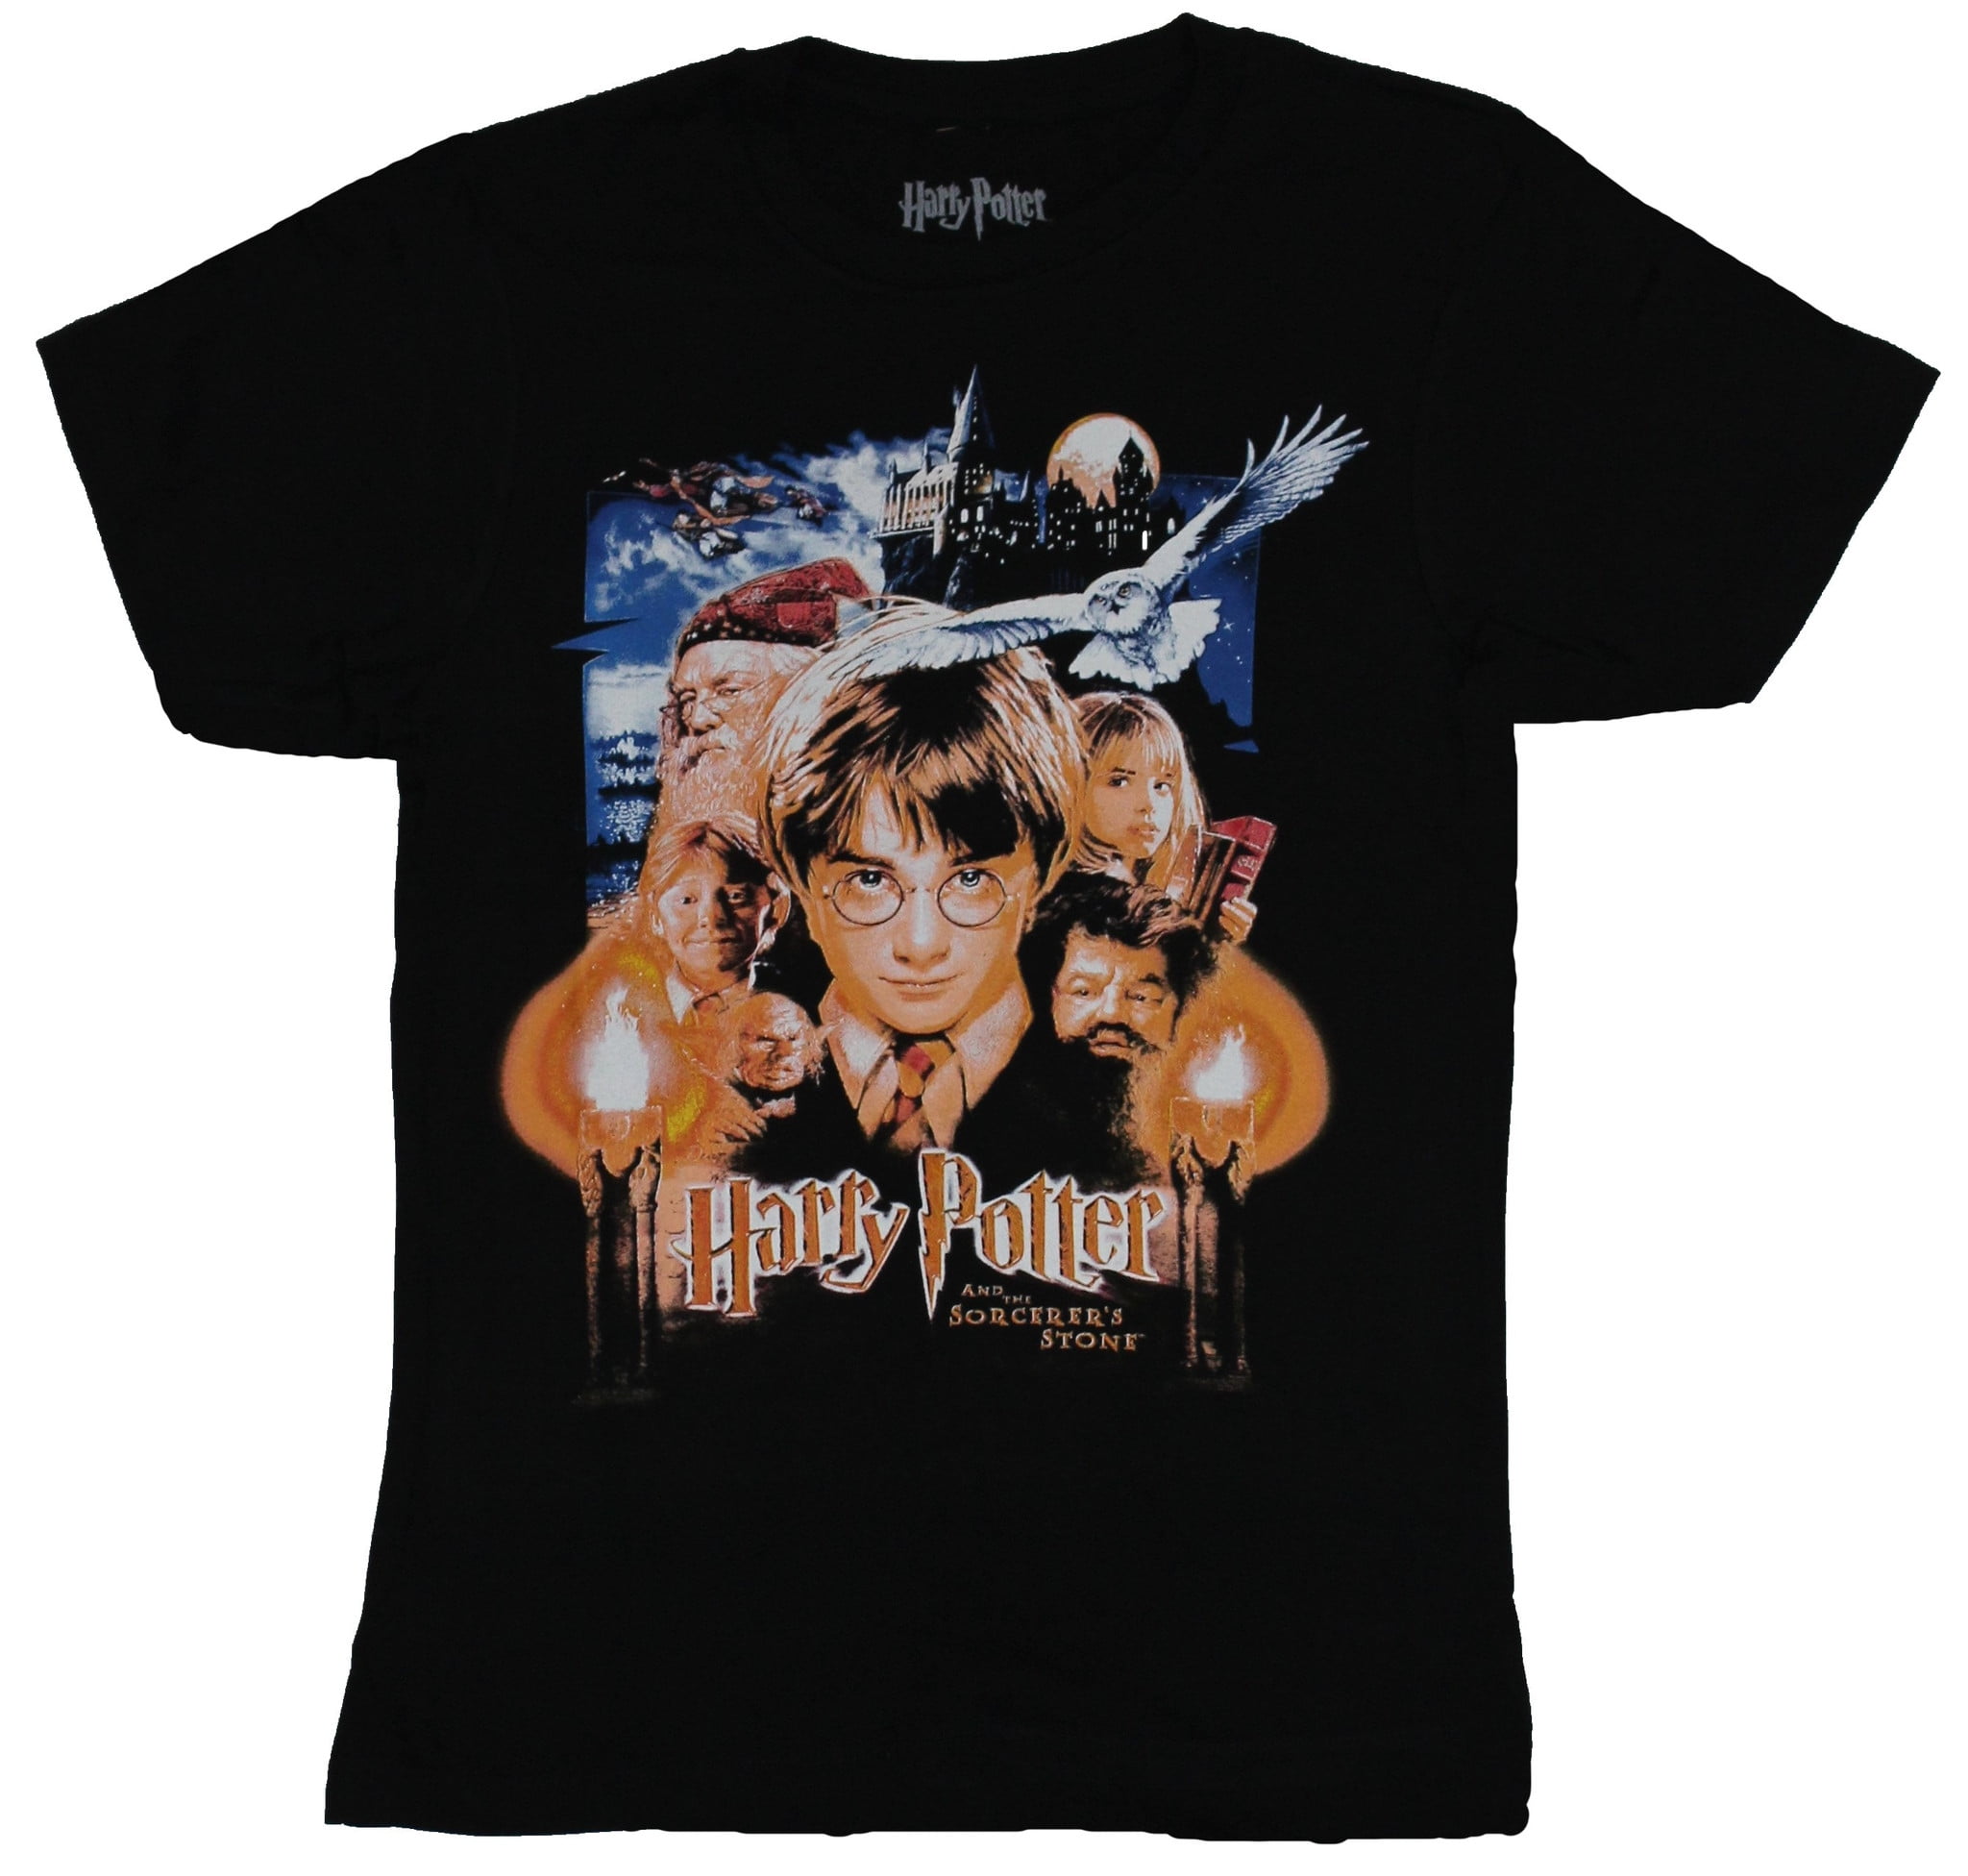 Harry Potter Garçon The Sorcerer's Stone Poster T-Shirt